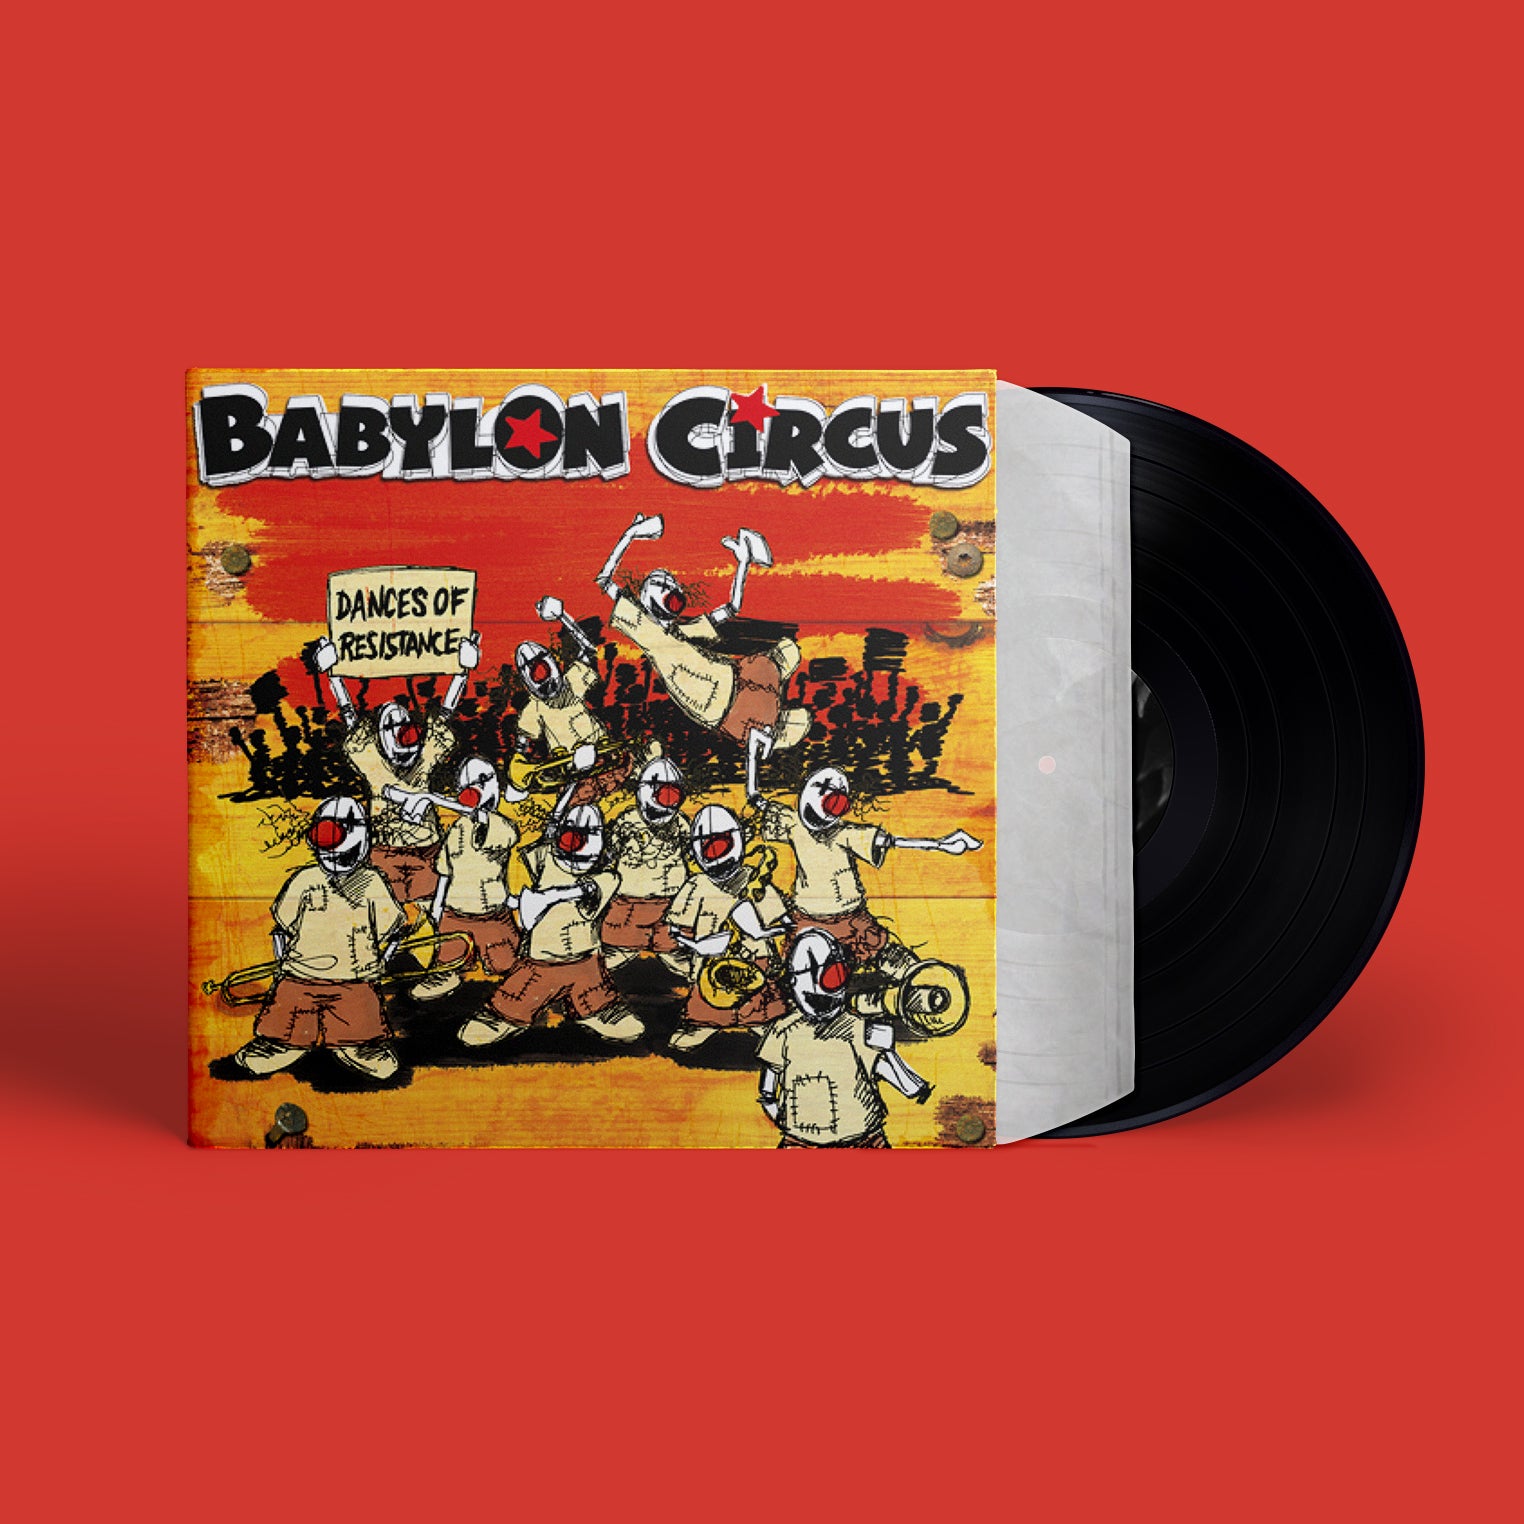 Babylon Circus - Dances of resistance